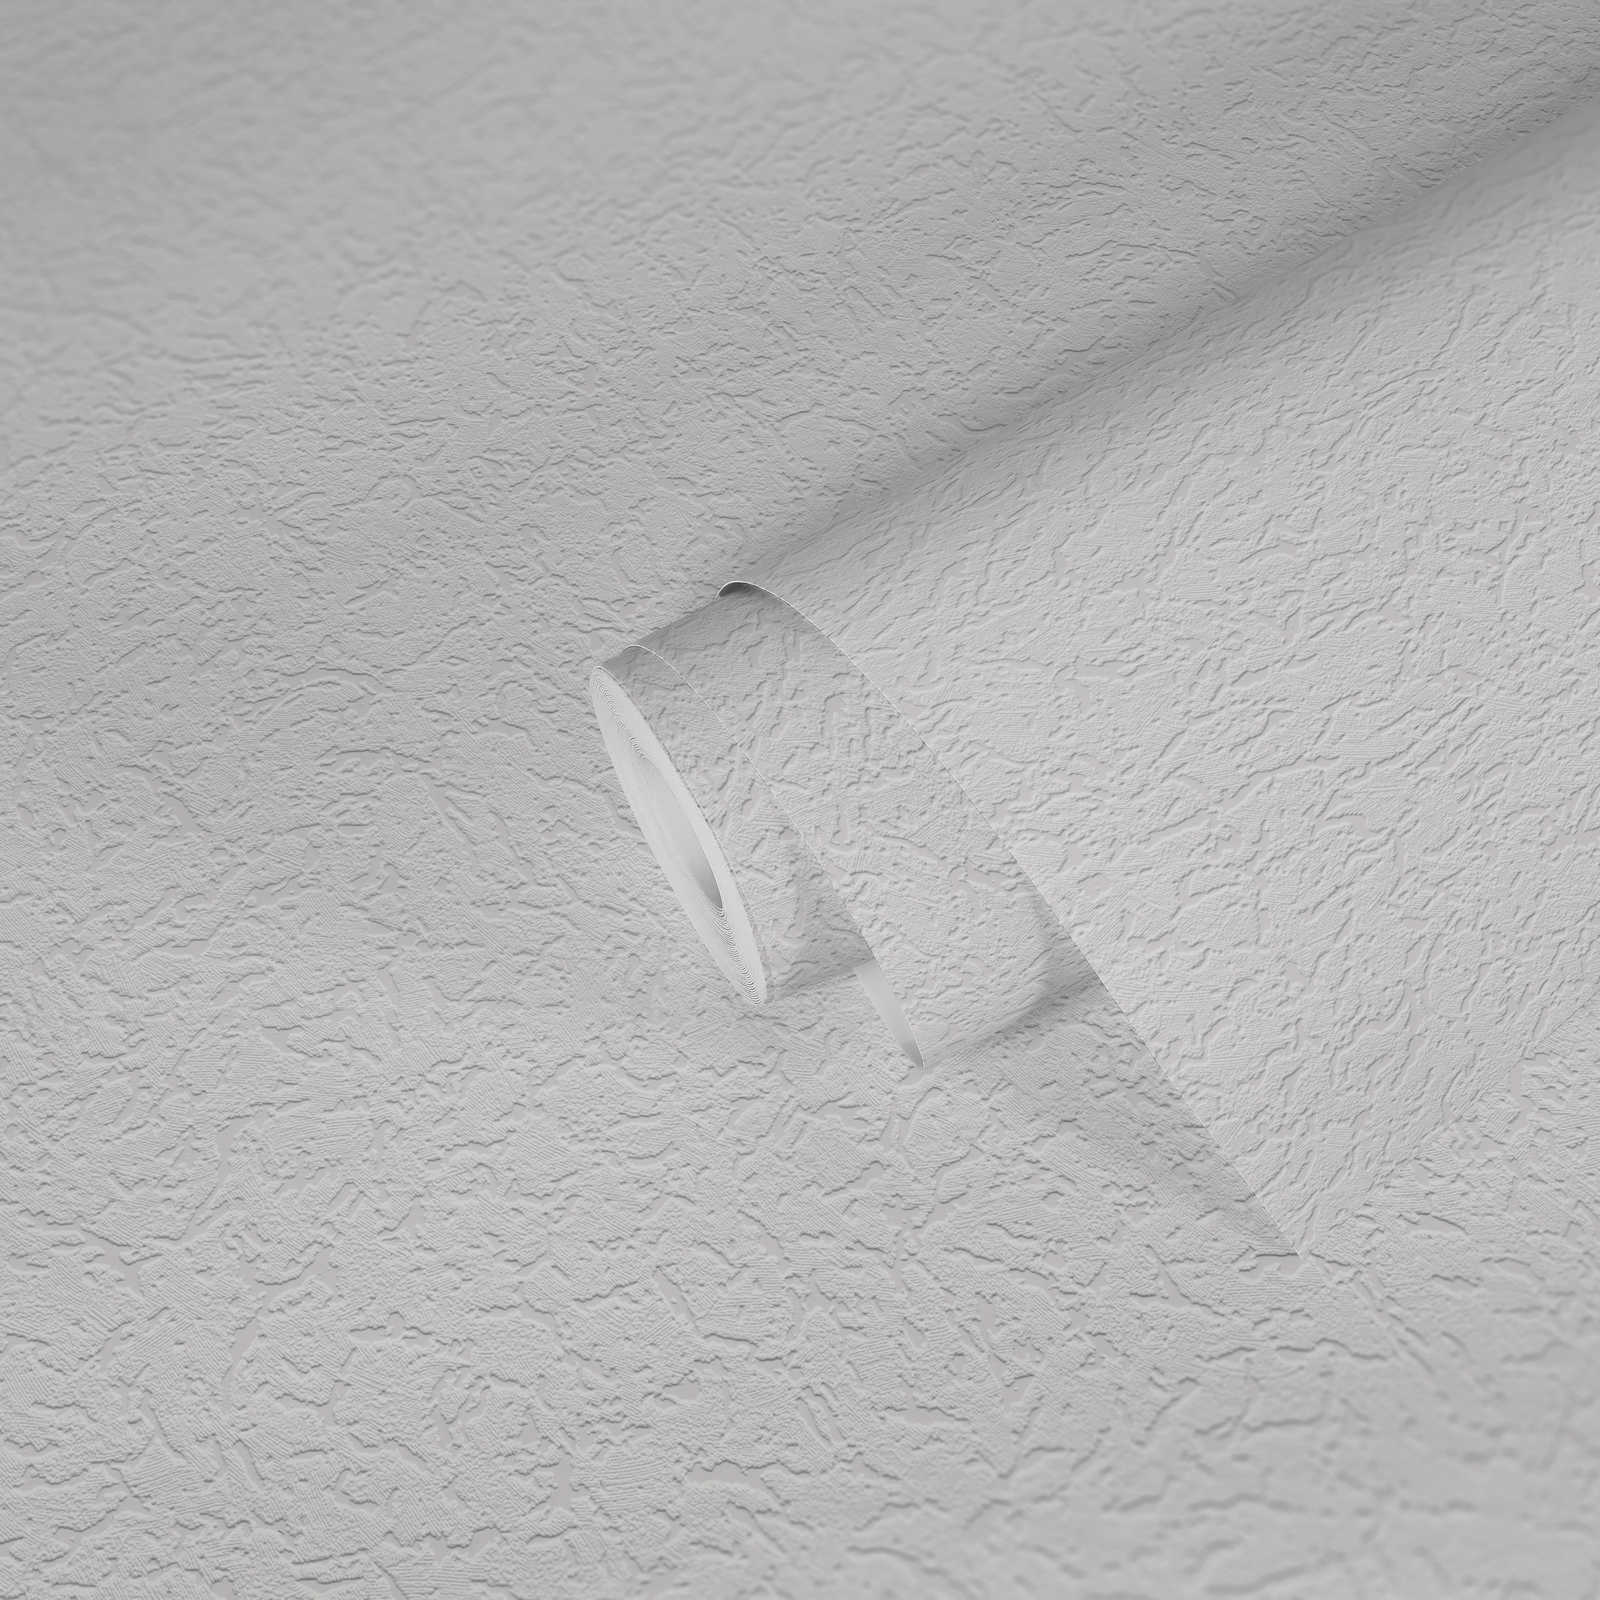             Ruwcastbehang met structuurpatroon klassiek design - wit
        